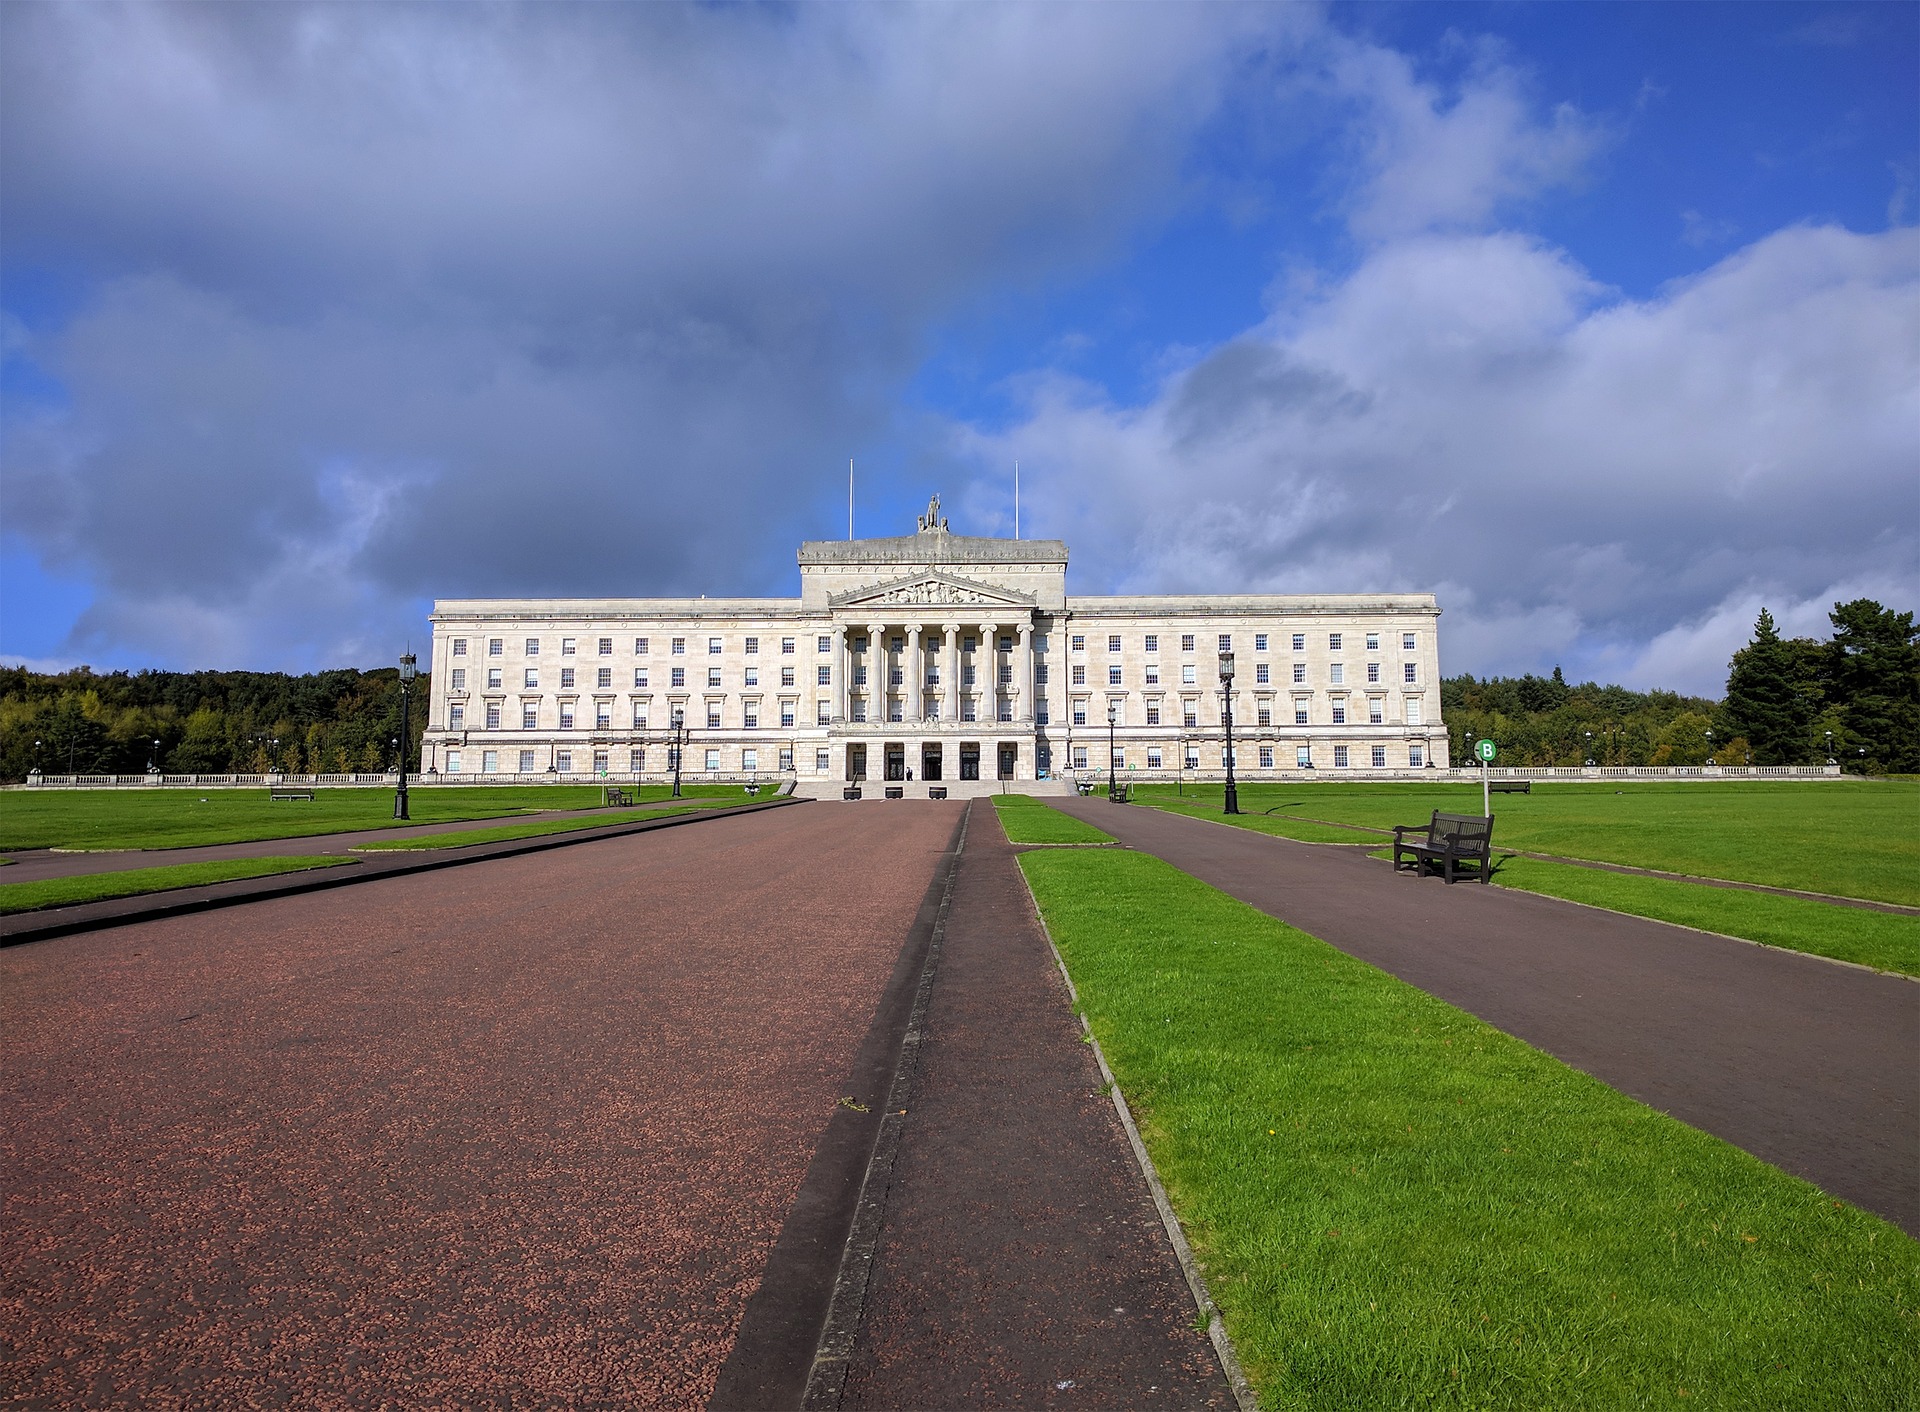 Stormont - Parliament buildings in Northern Ireland